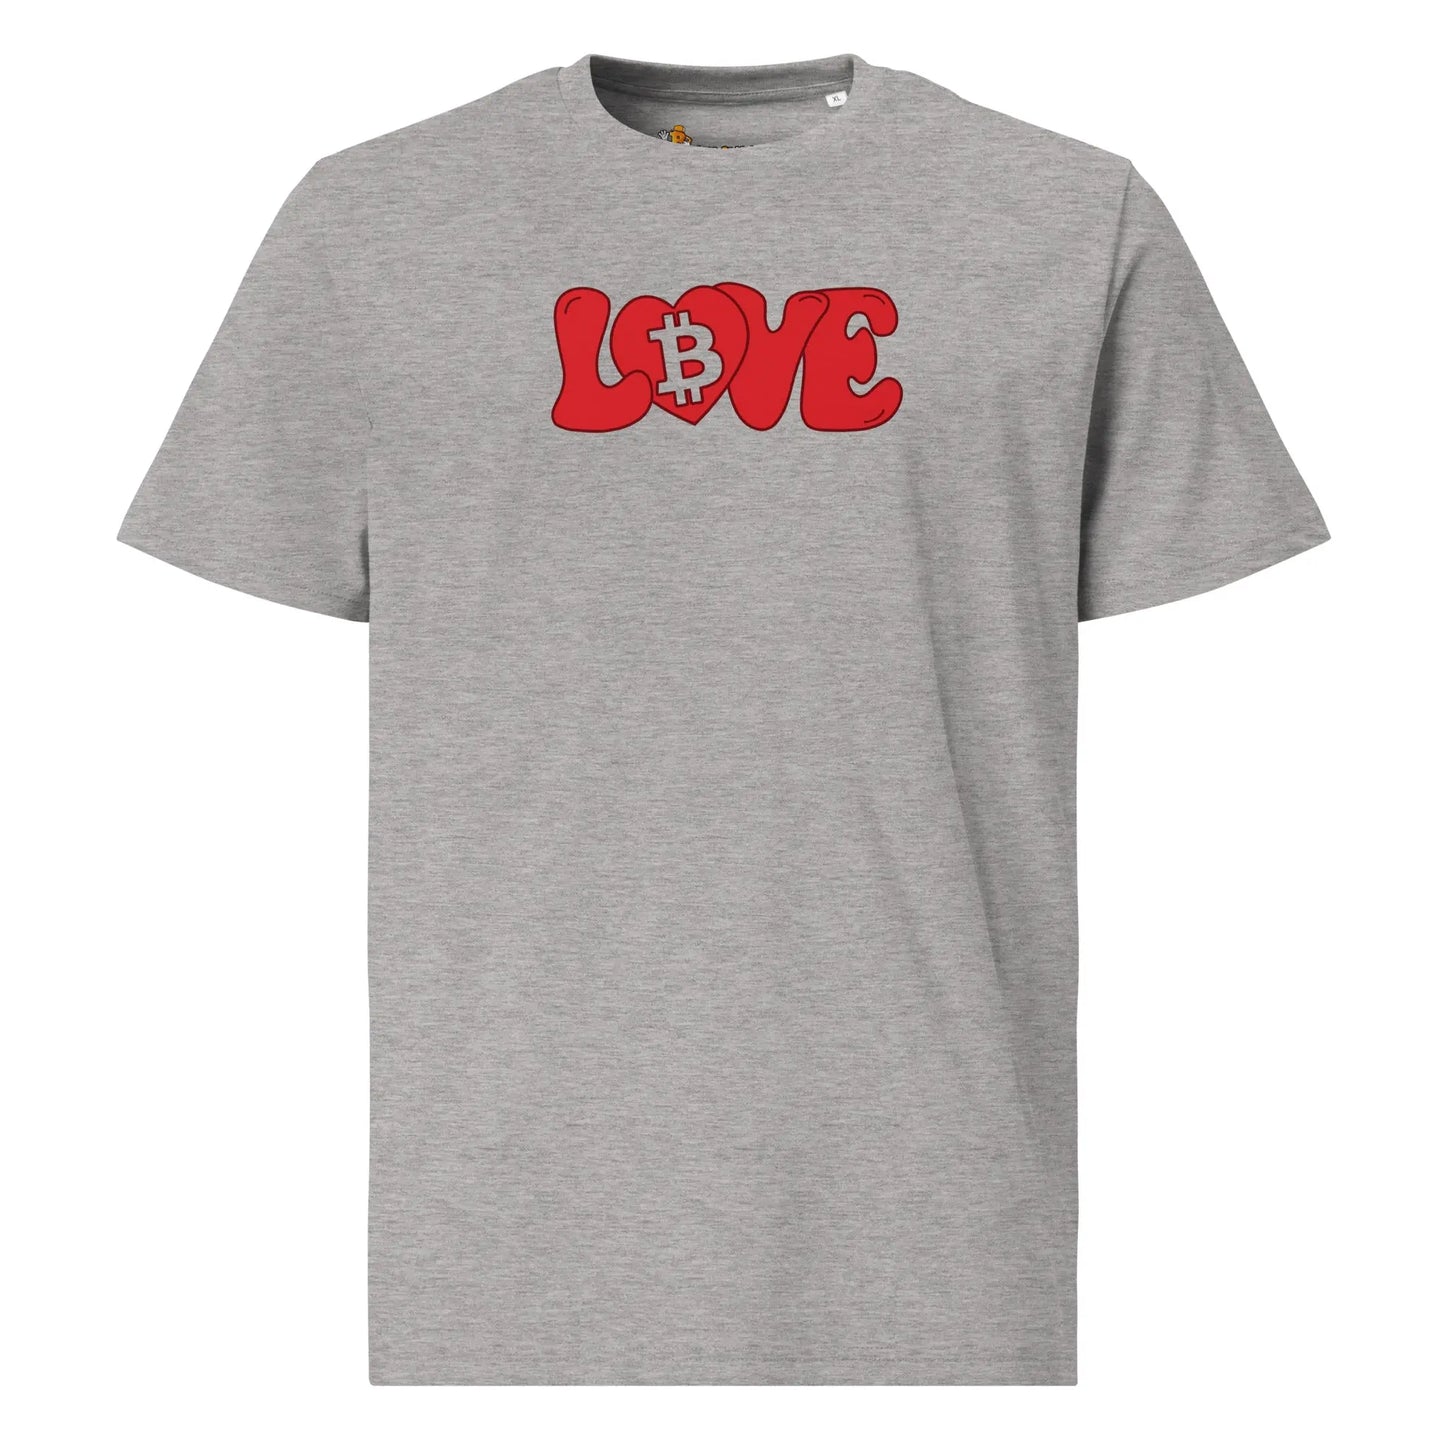 Groovy Love - Premium Unisex Organic Cotton Bitcoin T-shirt Grey Color